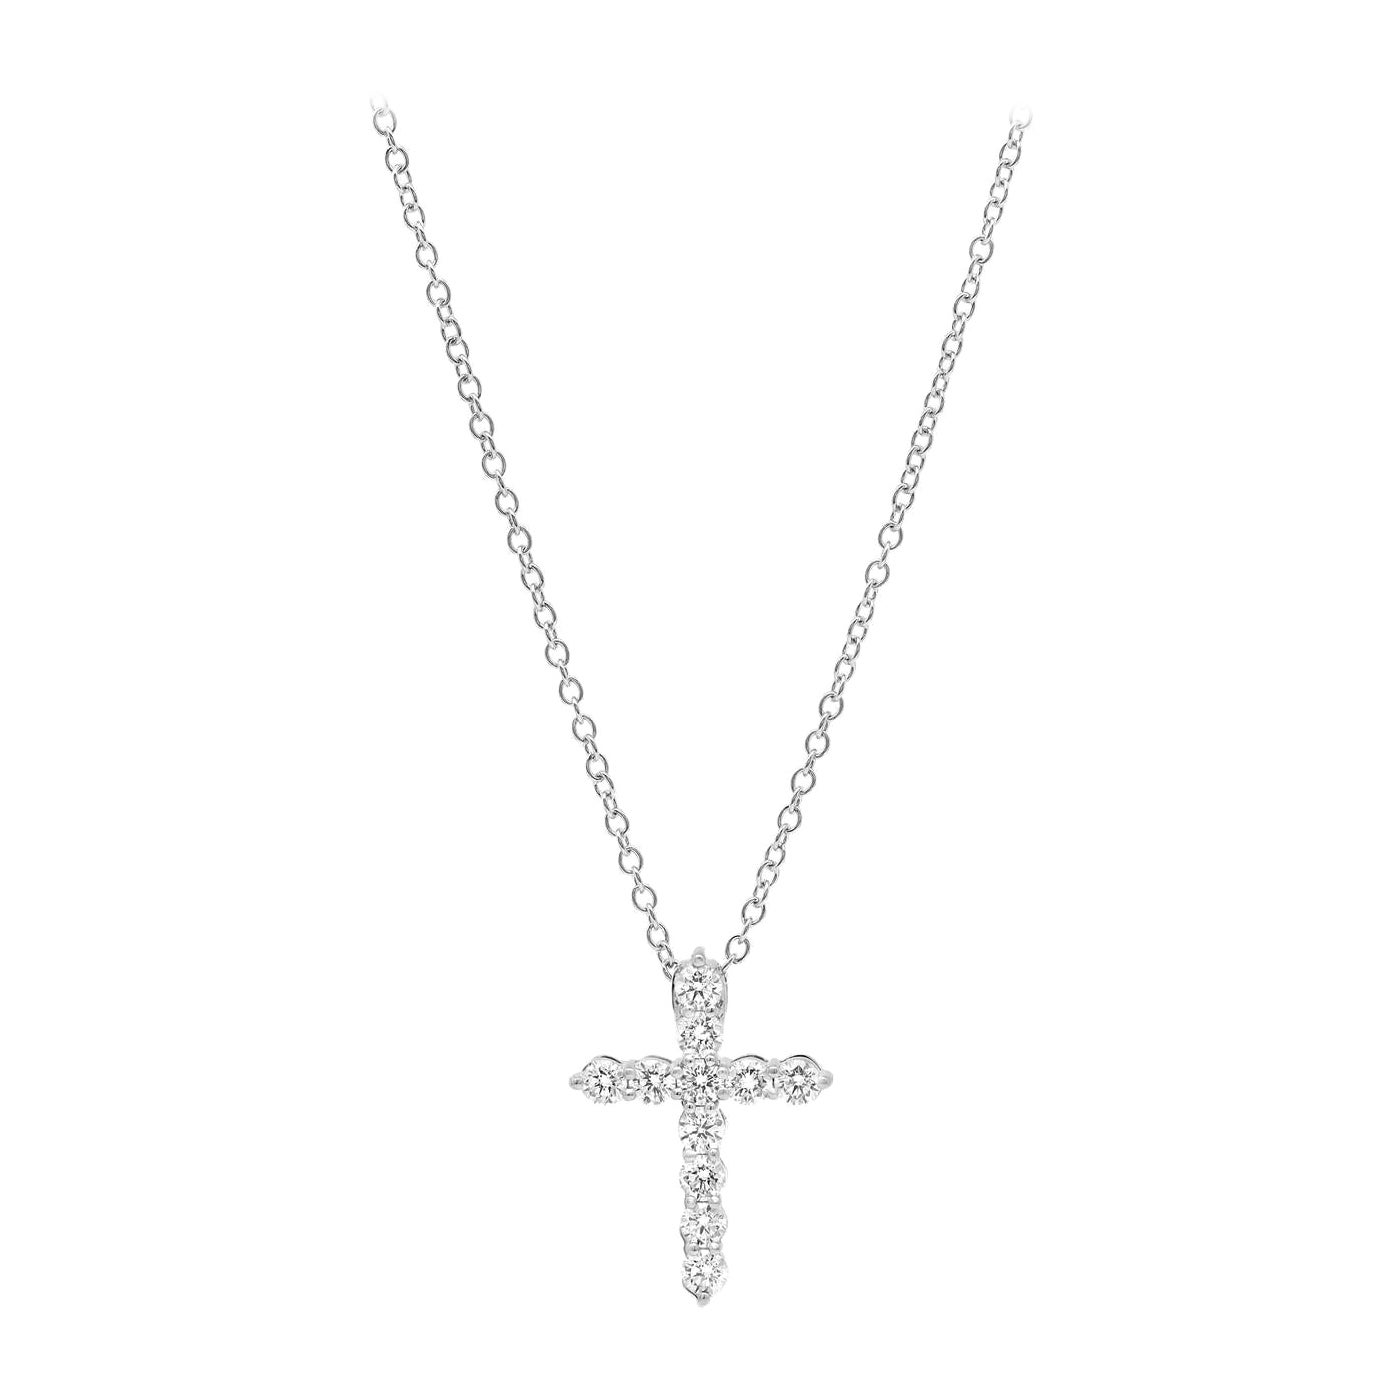 1.01 Carat Diamond Cross Pendant Necklace 18K White Gold For Sale